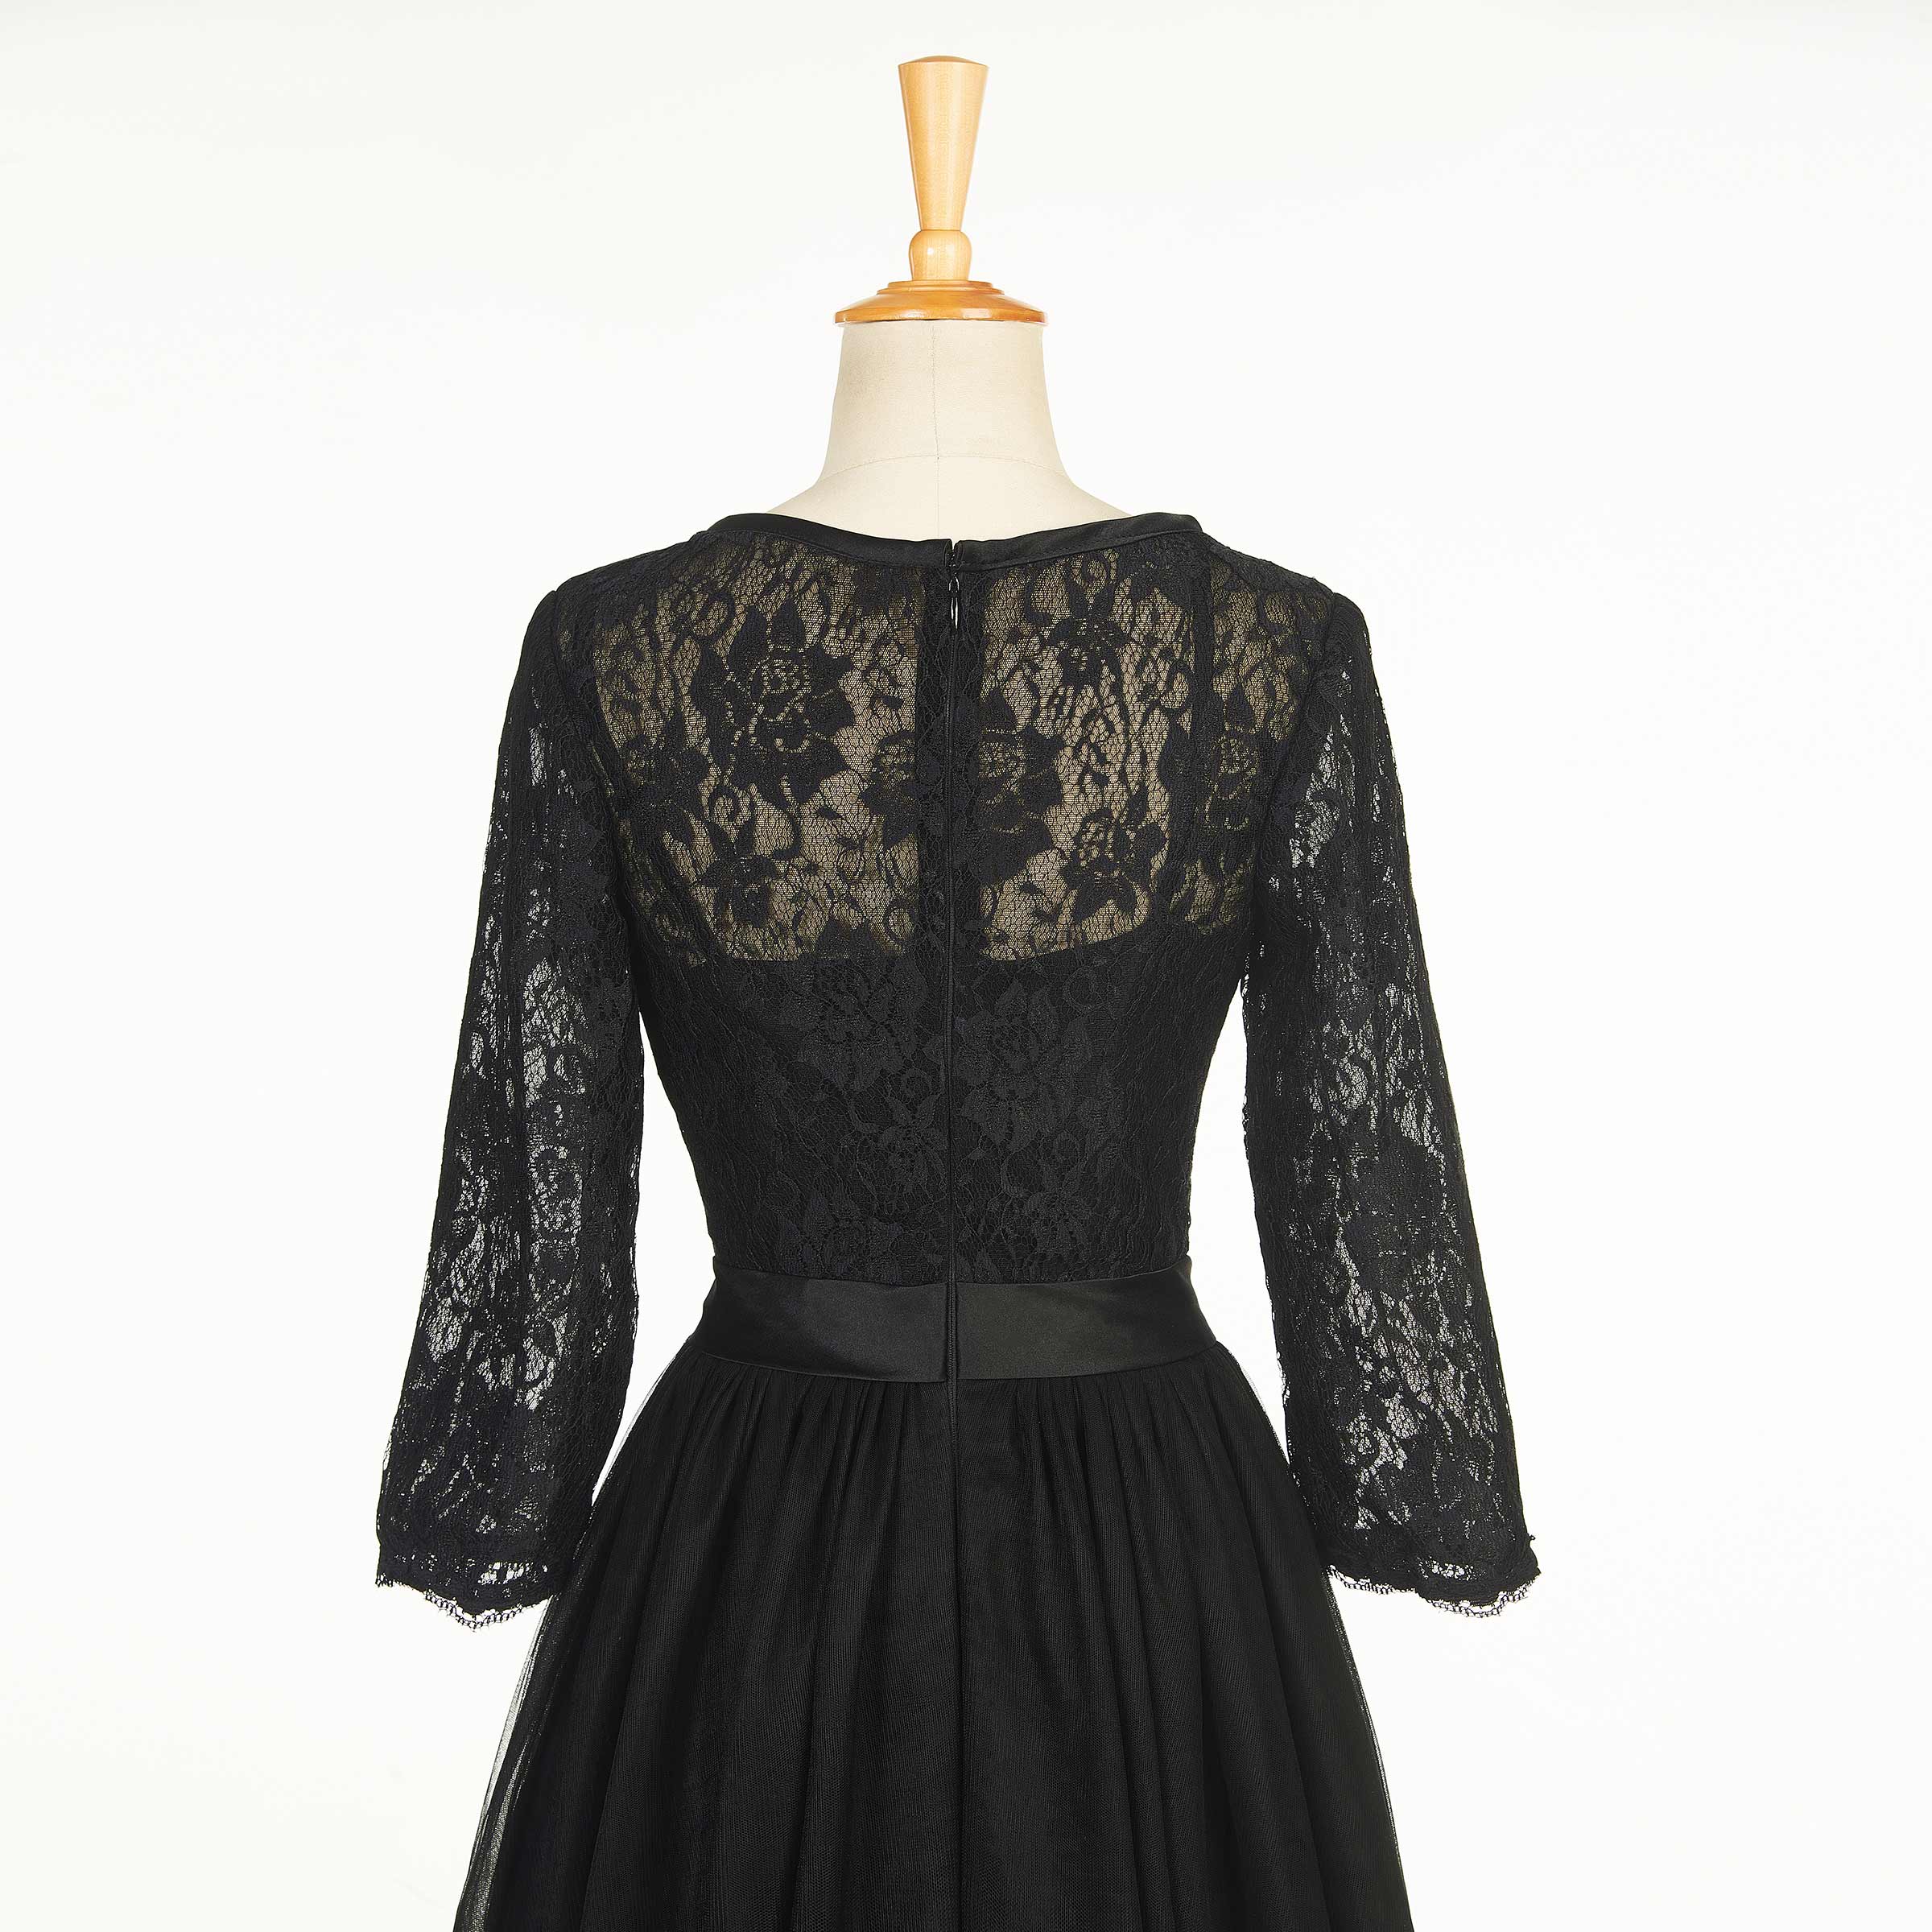 Scoop Neck 3/4 Length Sleeves Lace Tea-Length Evening Dress